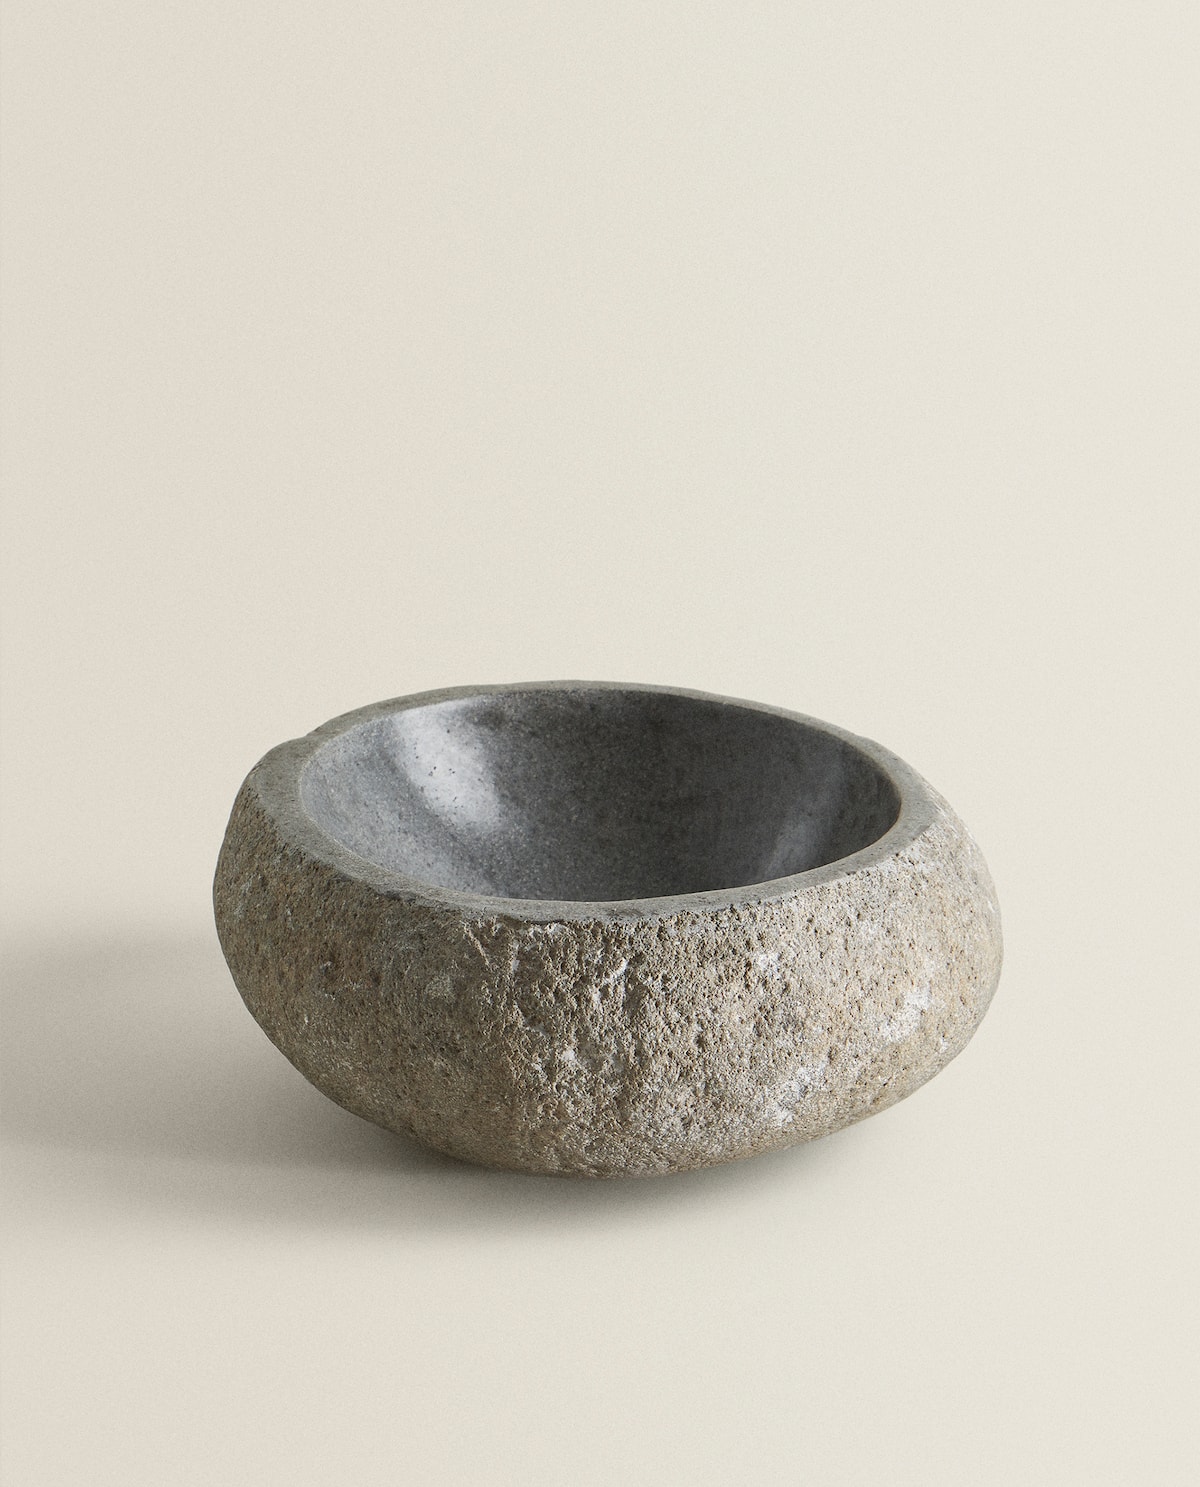 Stone object from Zara Home